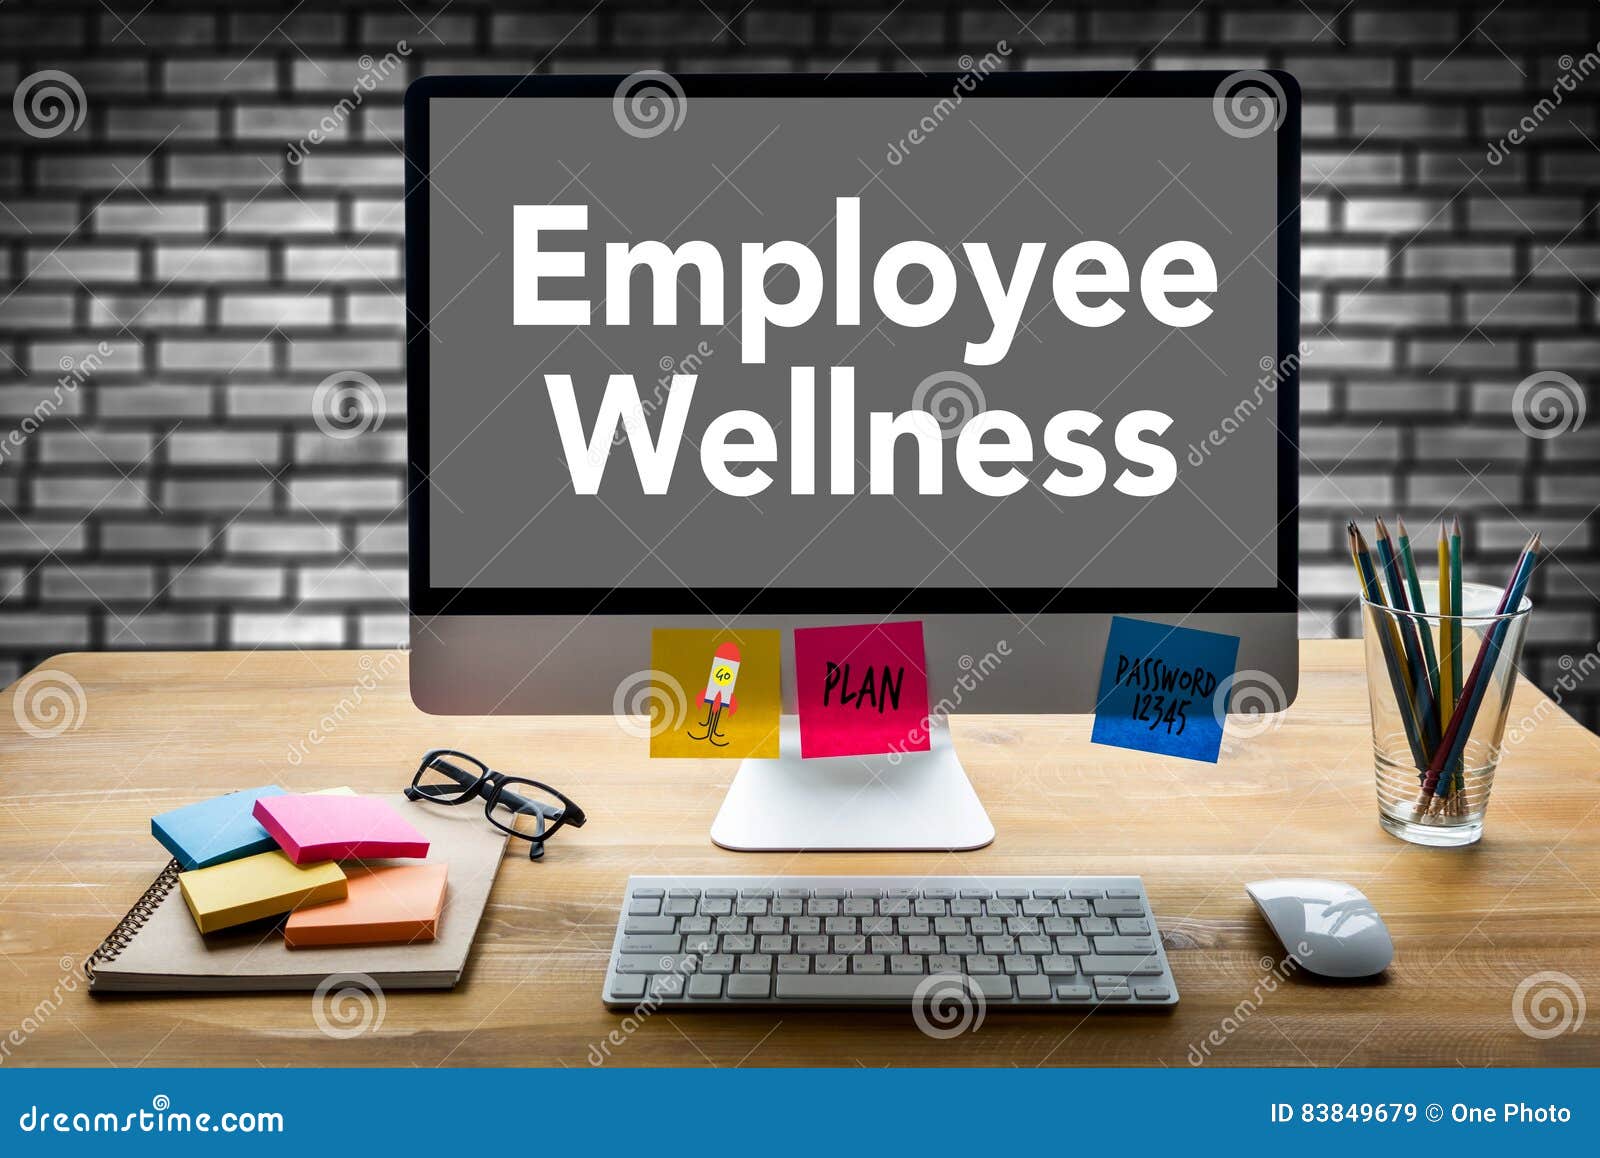 employee wellness program and managing health and program busin